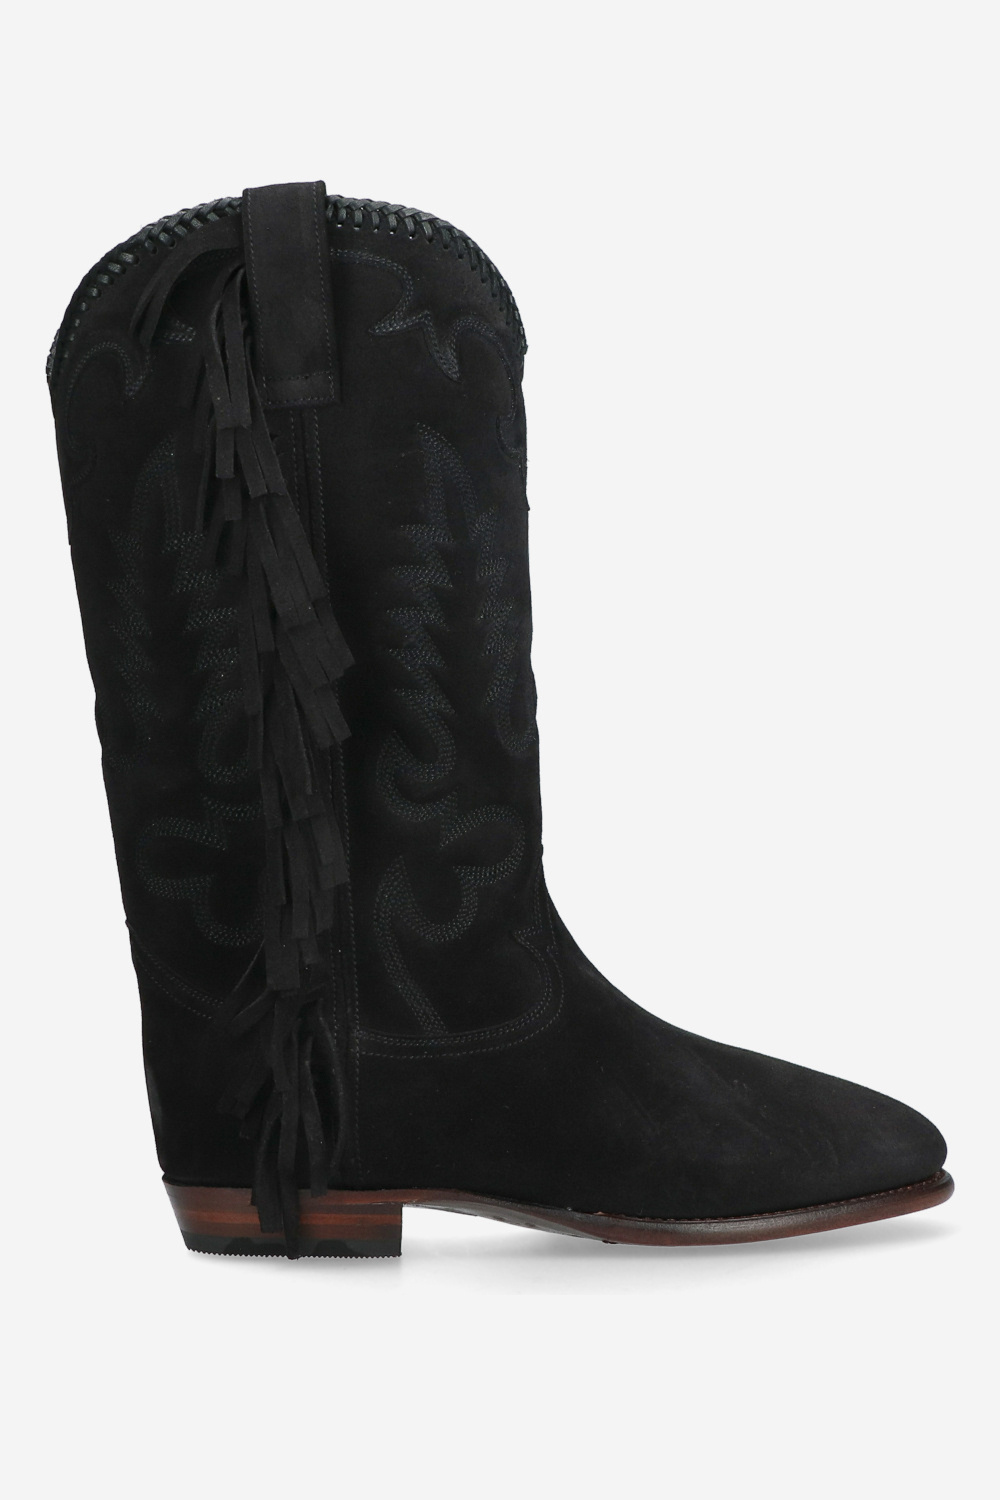 Shiloh Heritage Boots Black